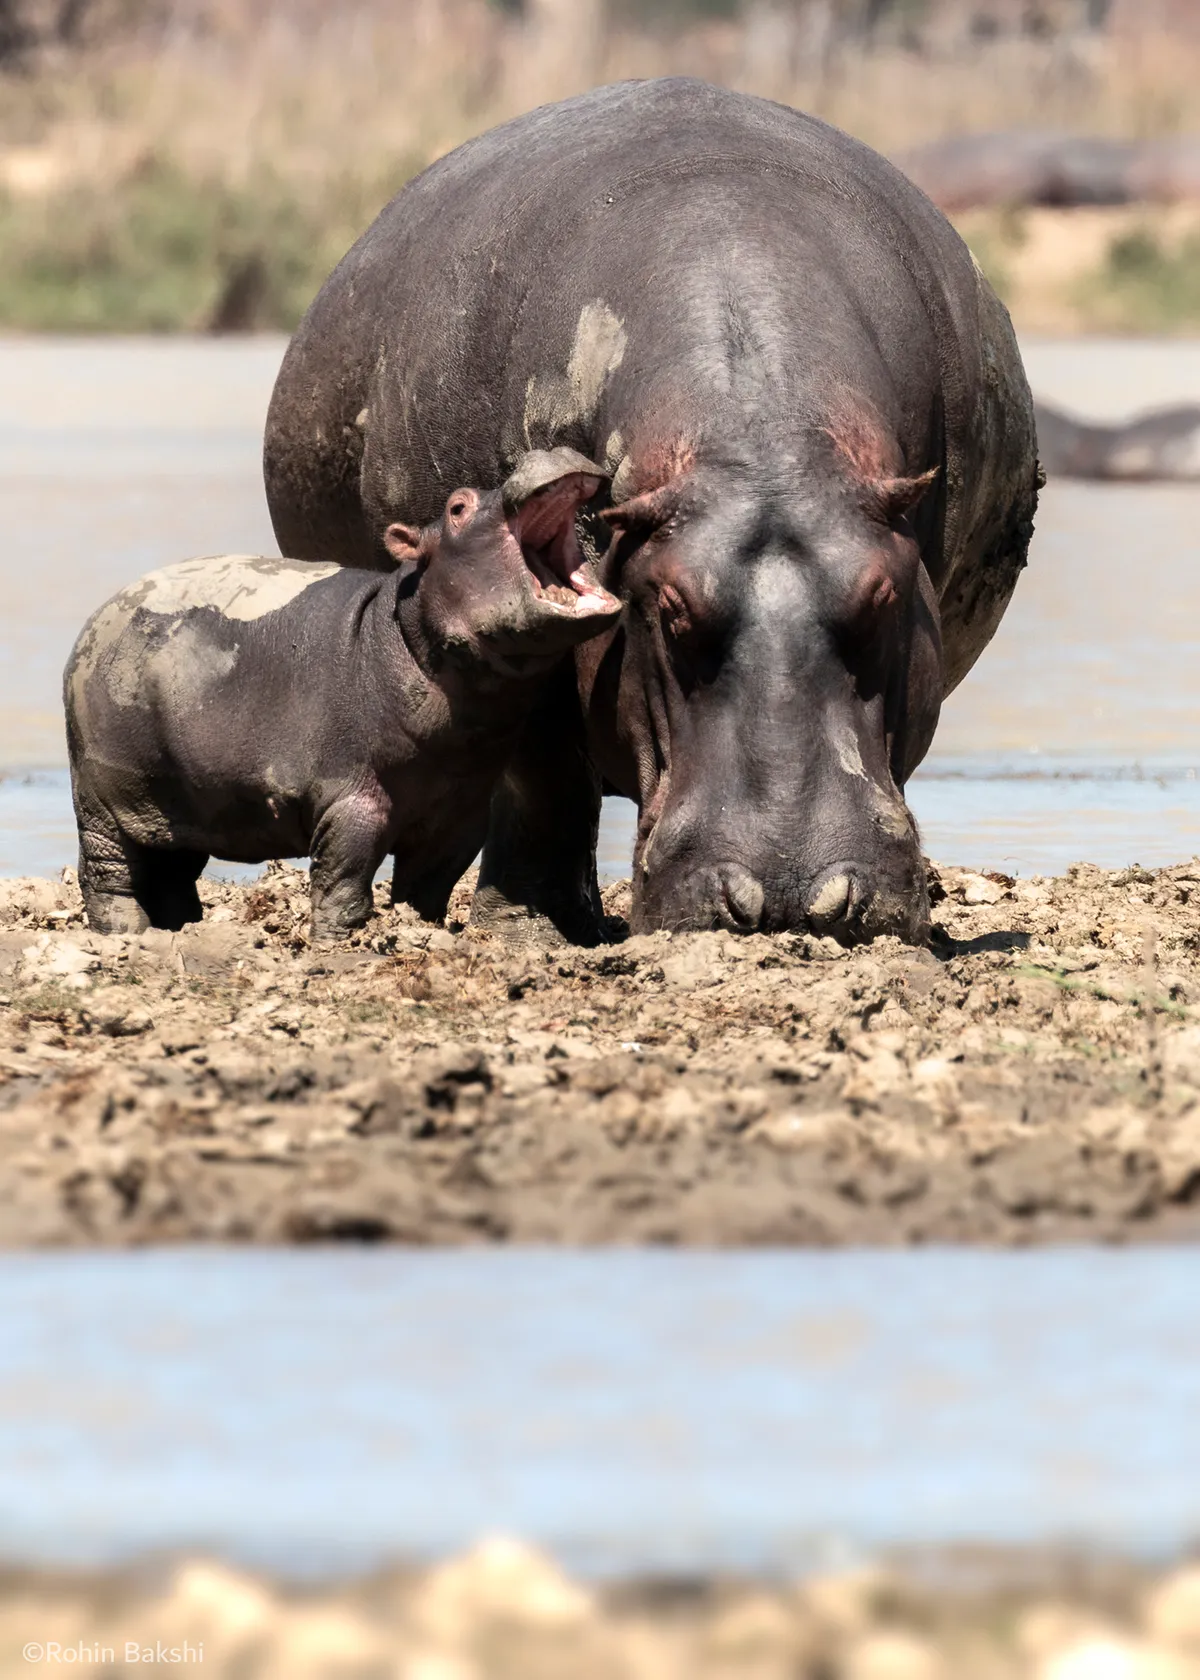 Cranky hippo: Hippo in Malawi. © Rohin Bakshi